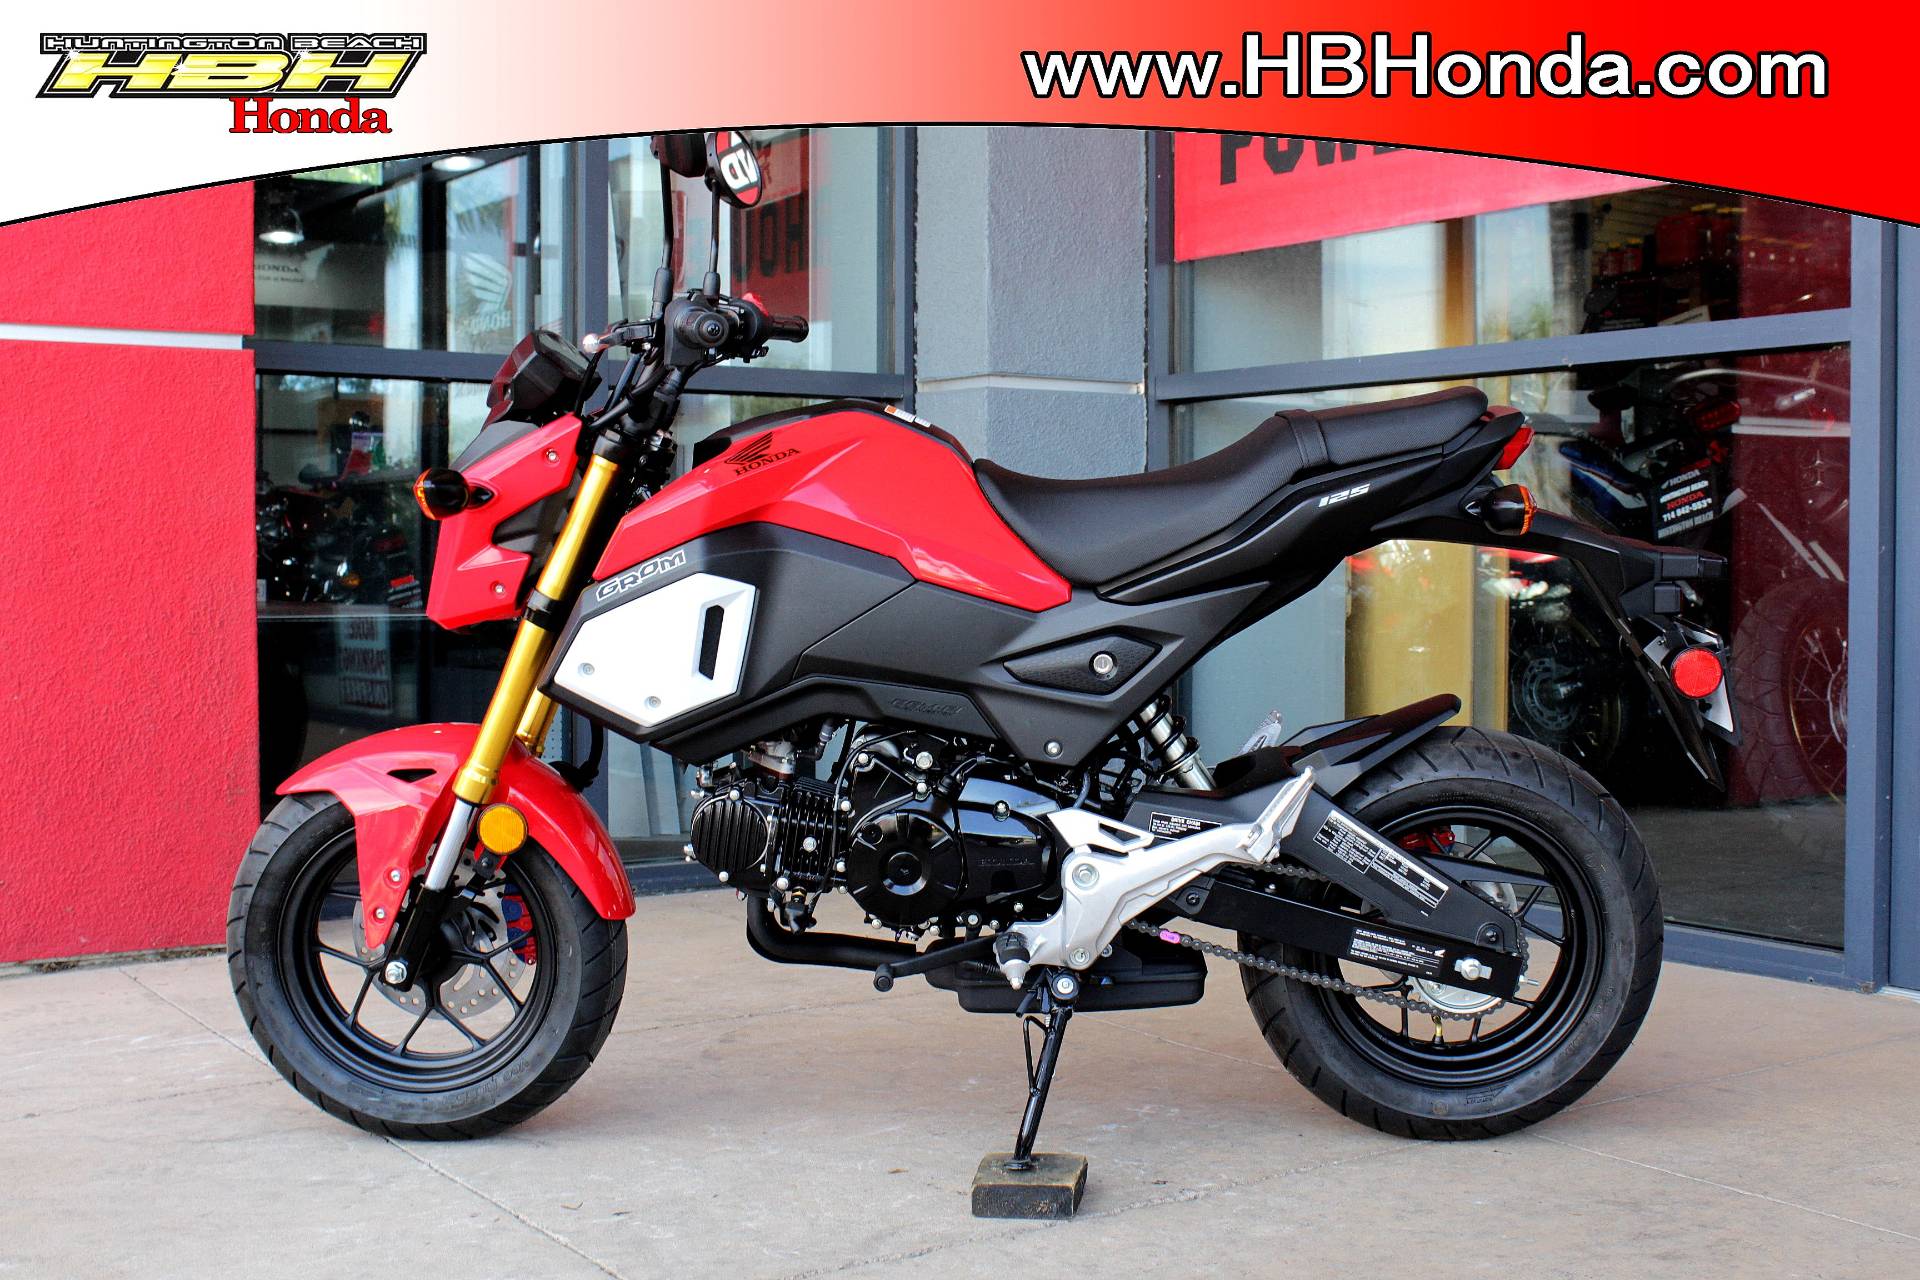 New Honda Grom Abs For Sale Cherry Red Motorcycles In Huntington Beach Ca Huntington Beach Honda M3223 0952